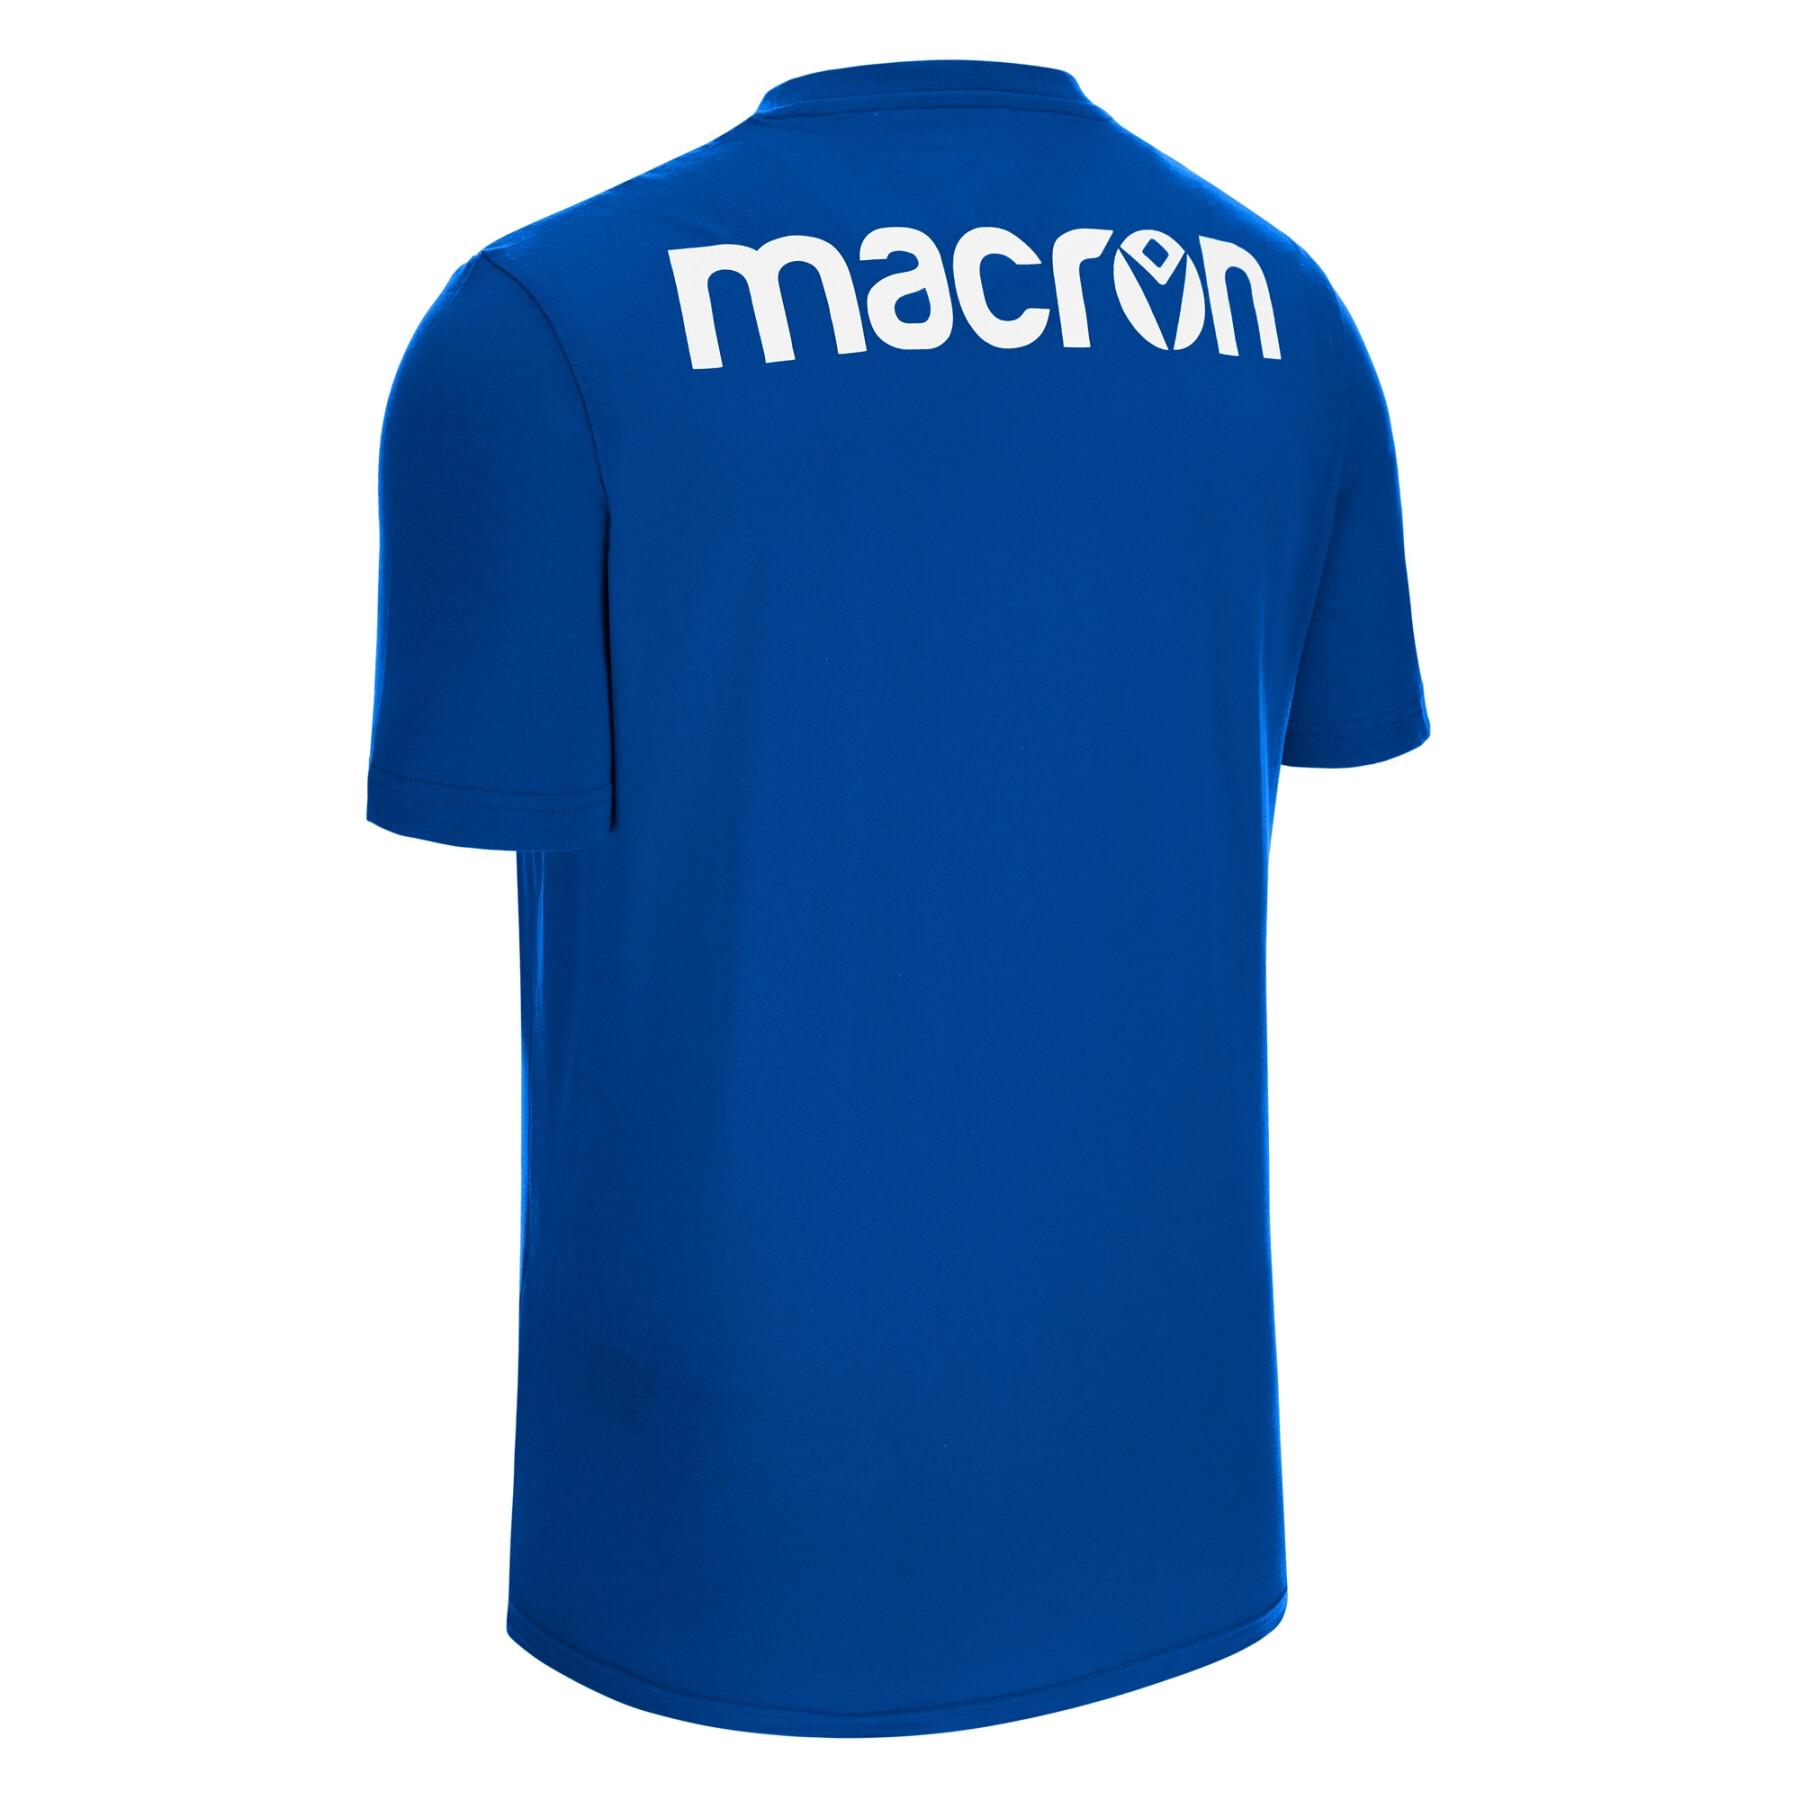 T-shirt Macron Mp 151 Hero x5